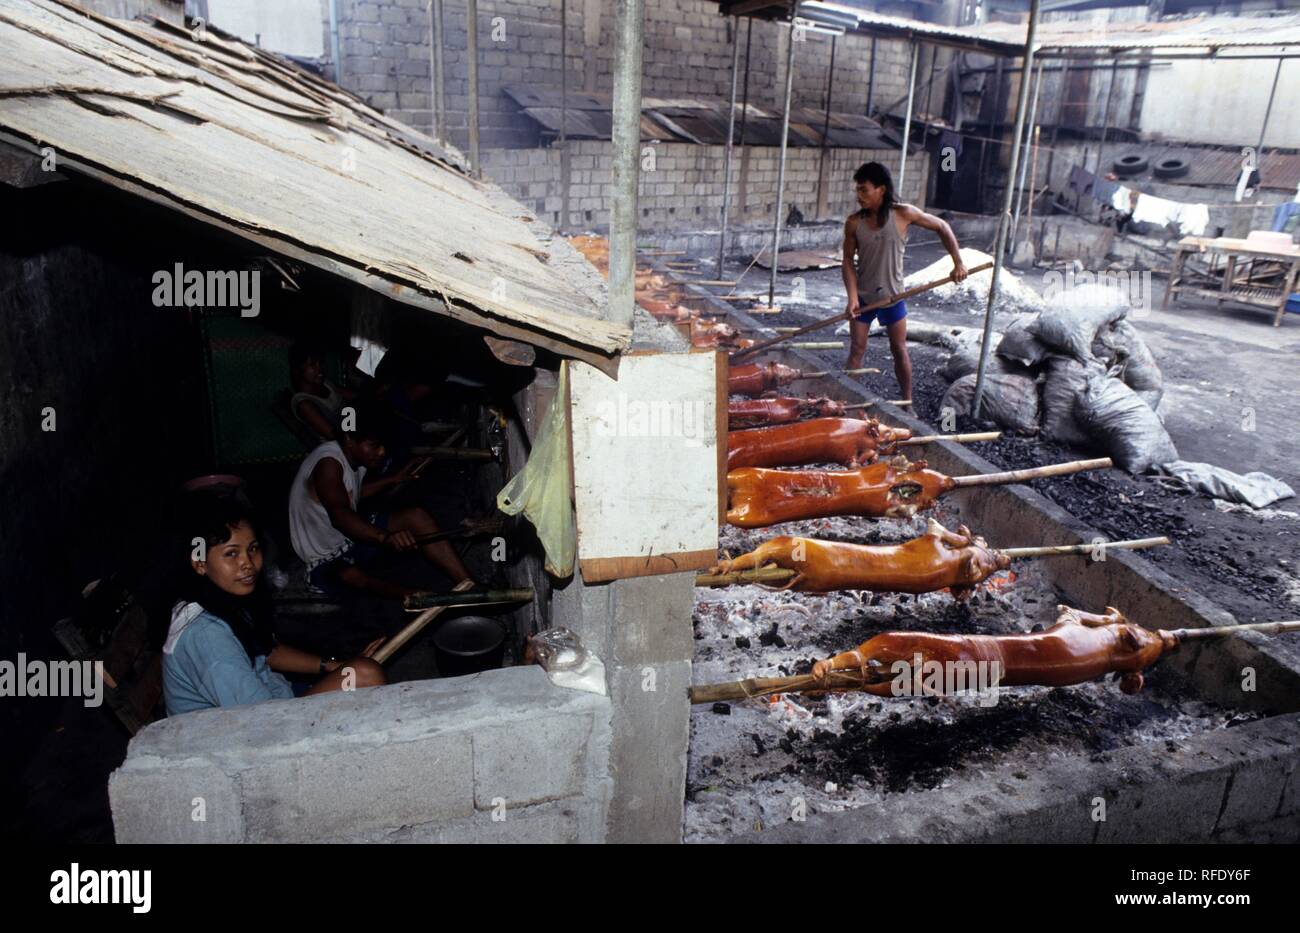 Roasting young pigs, La Loma district, Manila, Philippines Stock Photo